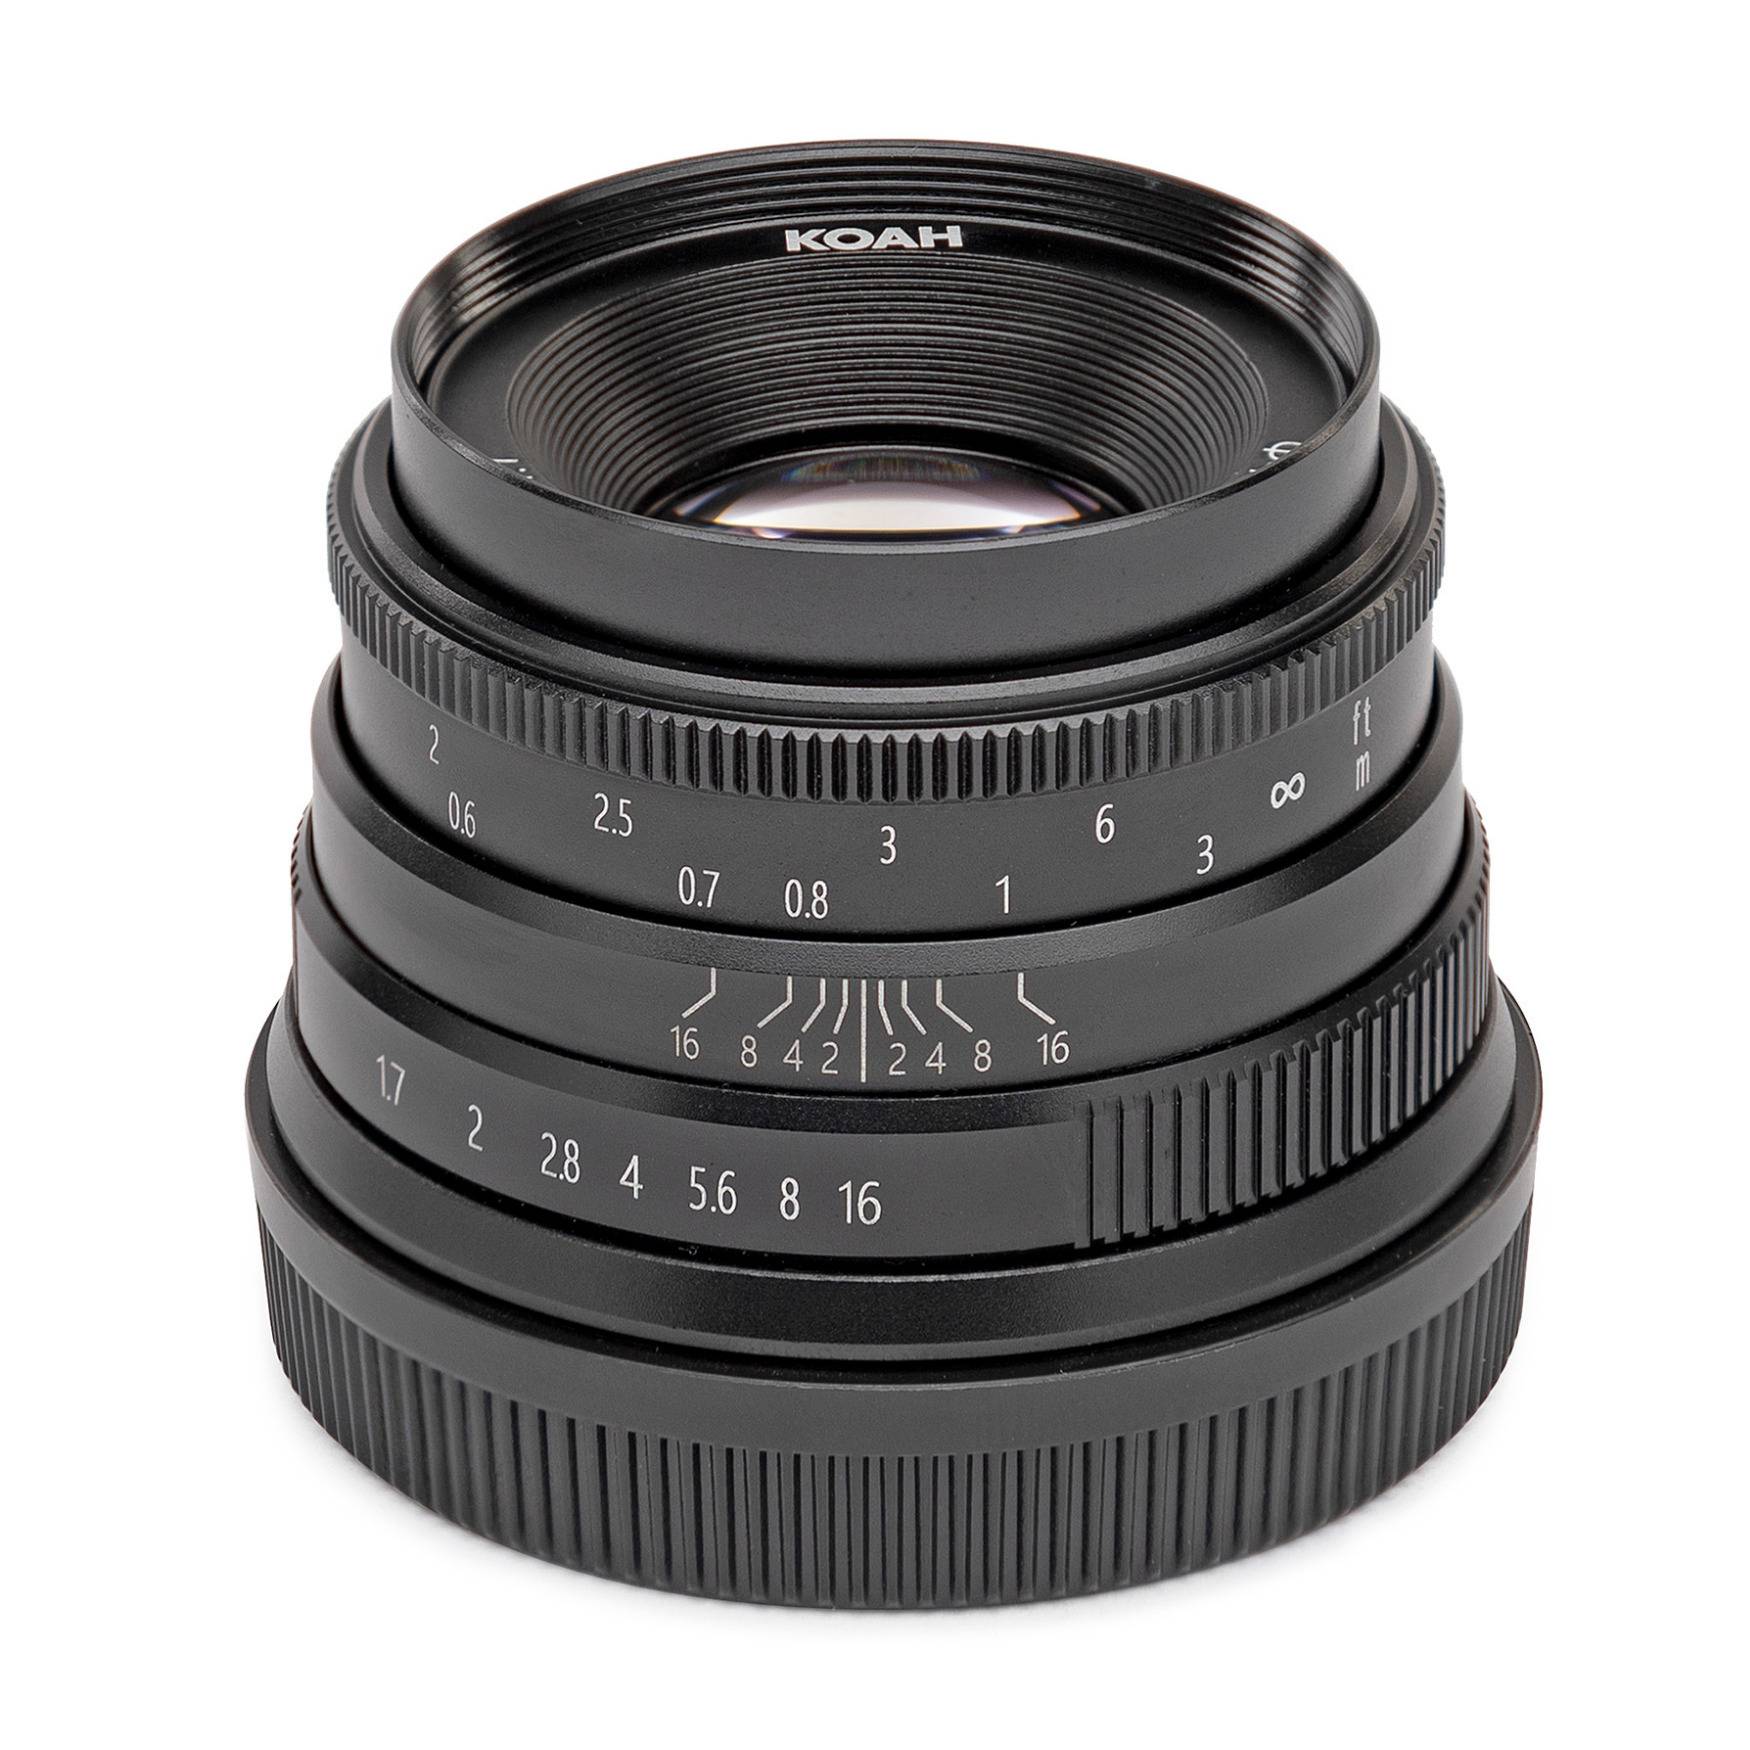 Koah Artisans Series 35mm f/1.7 Large Aperture Manual Focus Lens for Micro Four Thirds (Black)